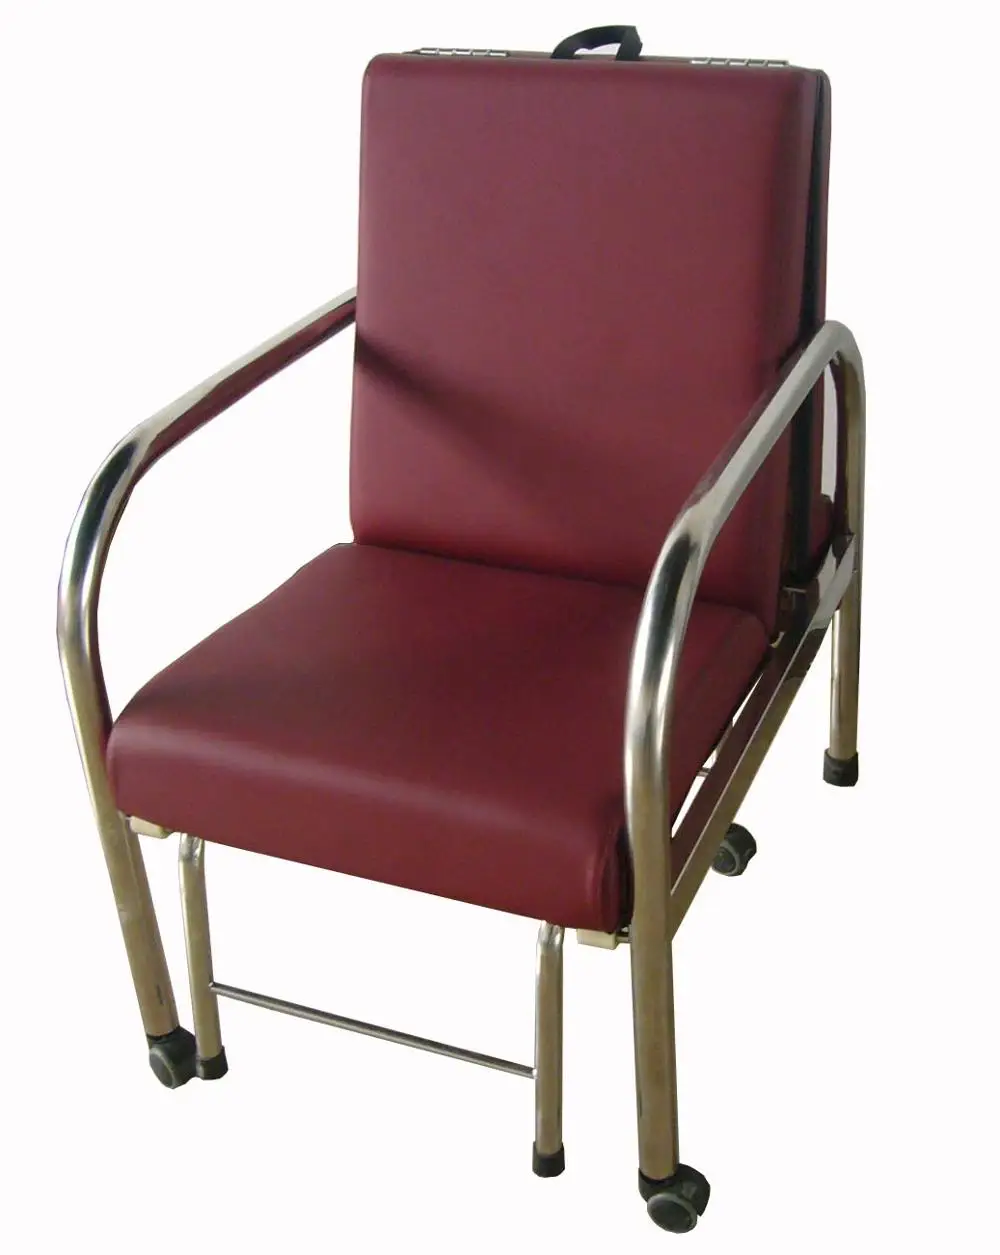 Hospital Attendant Sleeper Chair Buy Foldable Recliner Chair